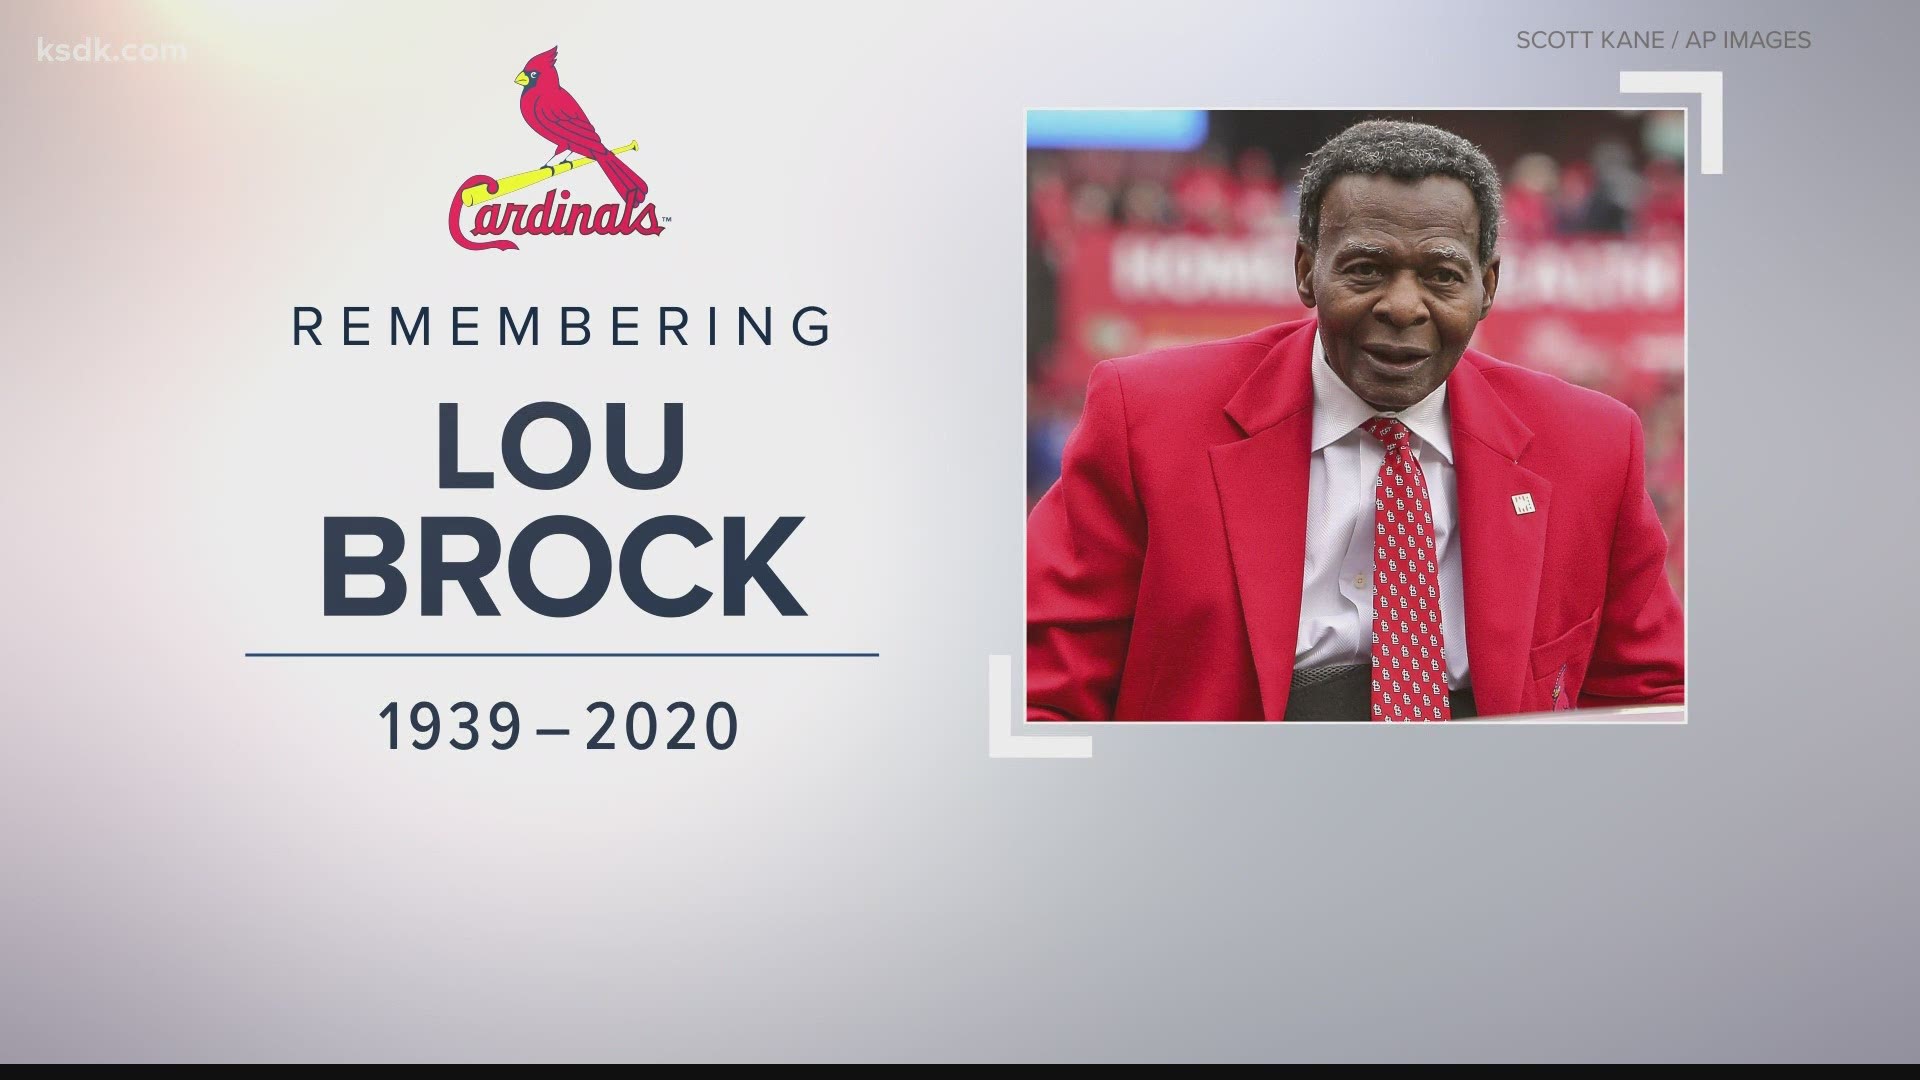 Collected Wisdom of St. Louis Cardinals legend Lou Brock